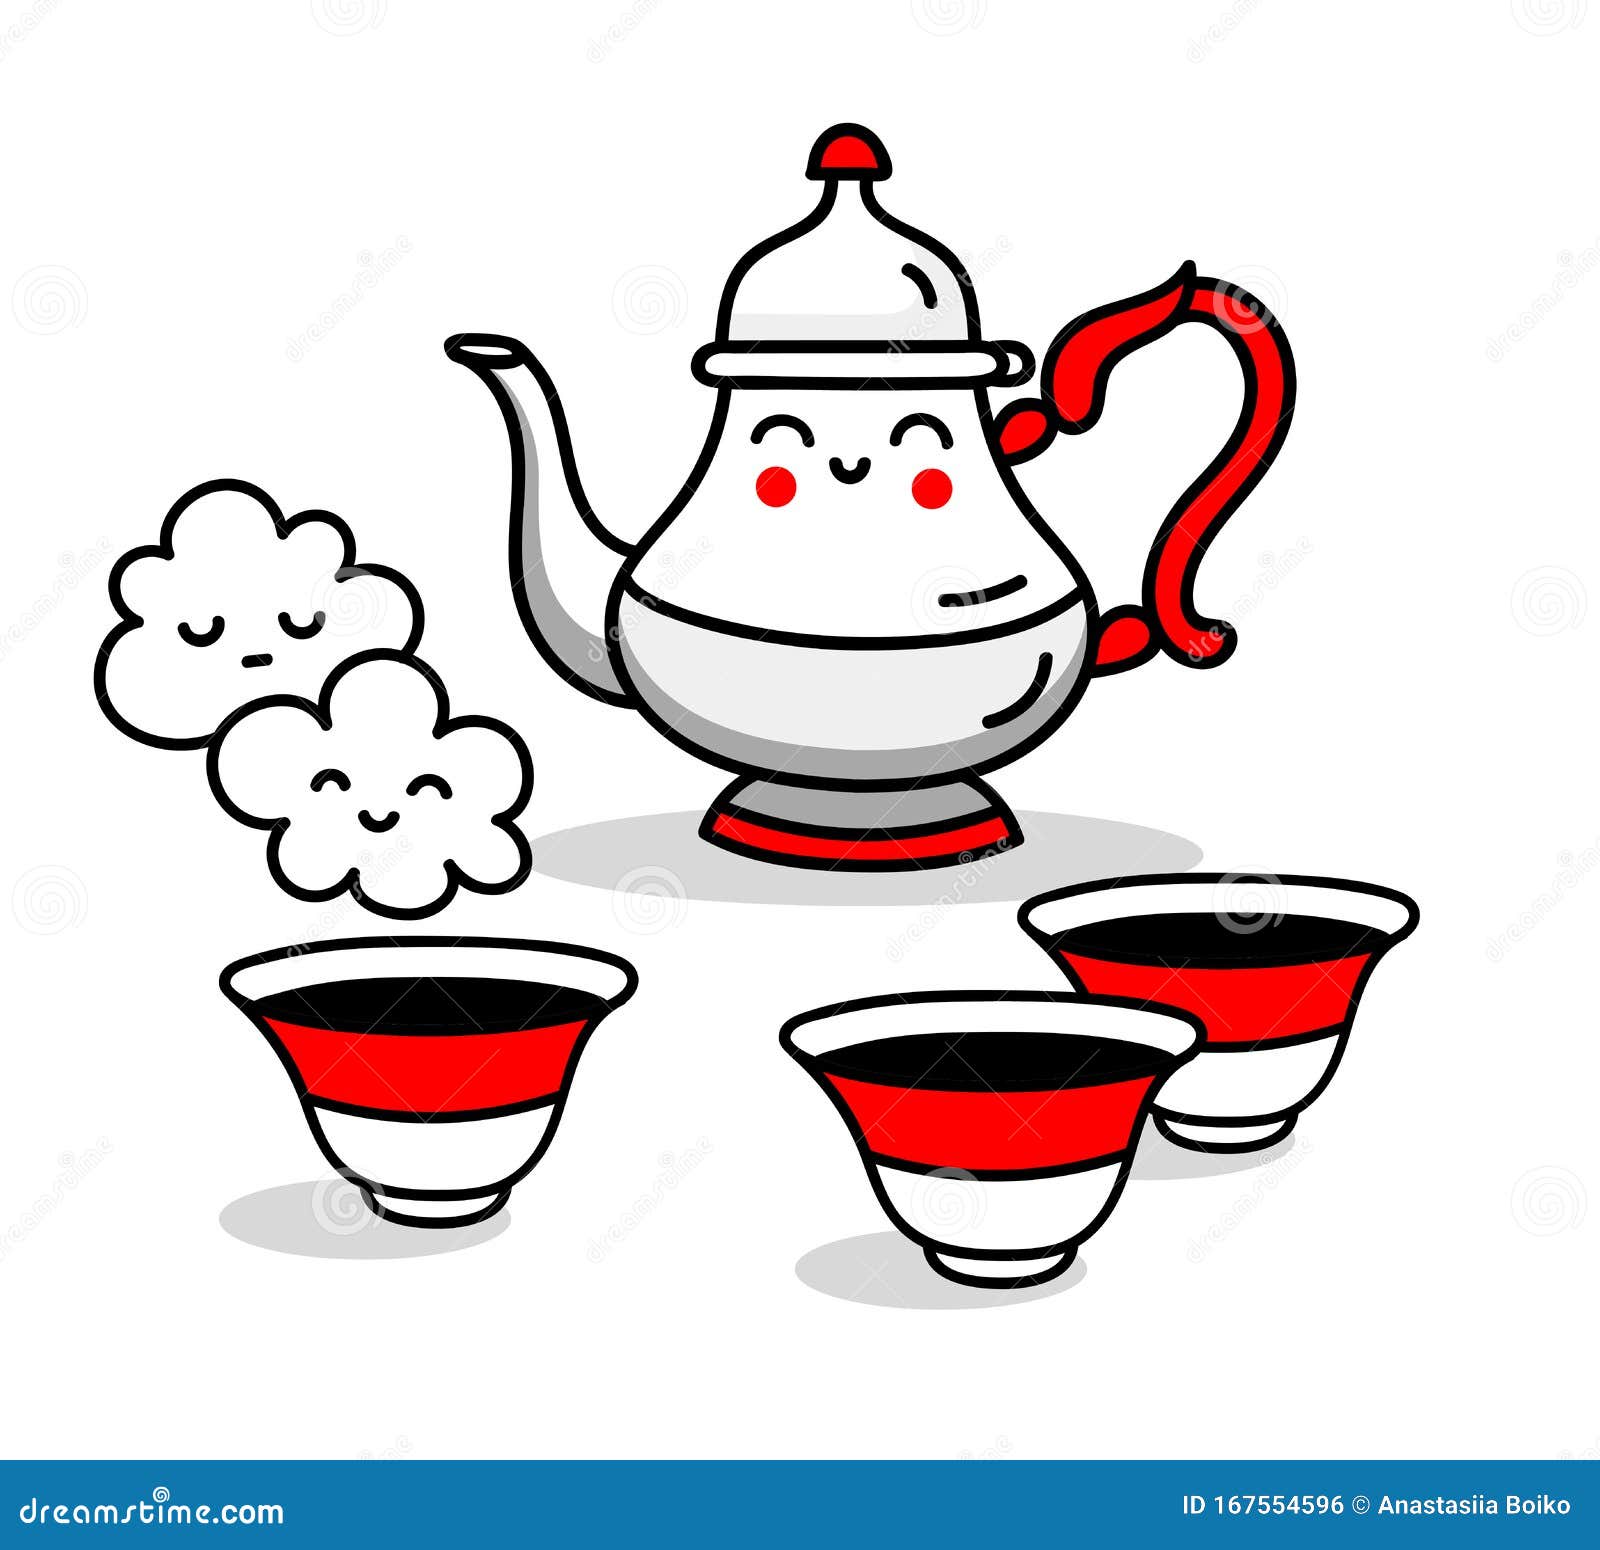 https://thumbs.dreamstime.com/z/cute-teapot-teacups-kawaii-cartoon-characters-cute-teapot-teacups-kawaii-cartoon-characters-tea-party-vector-167554596.jpg